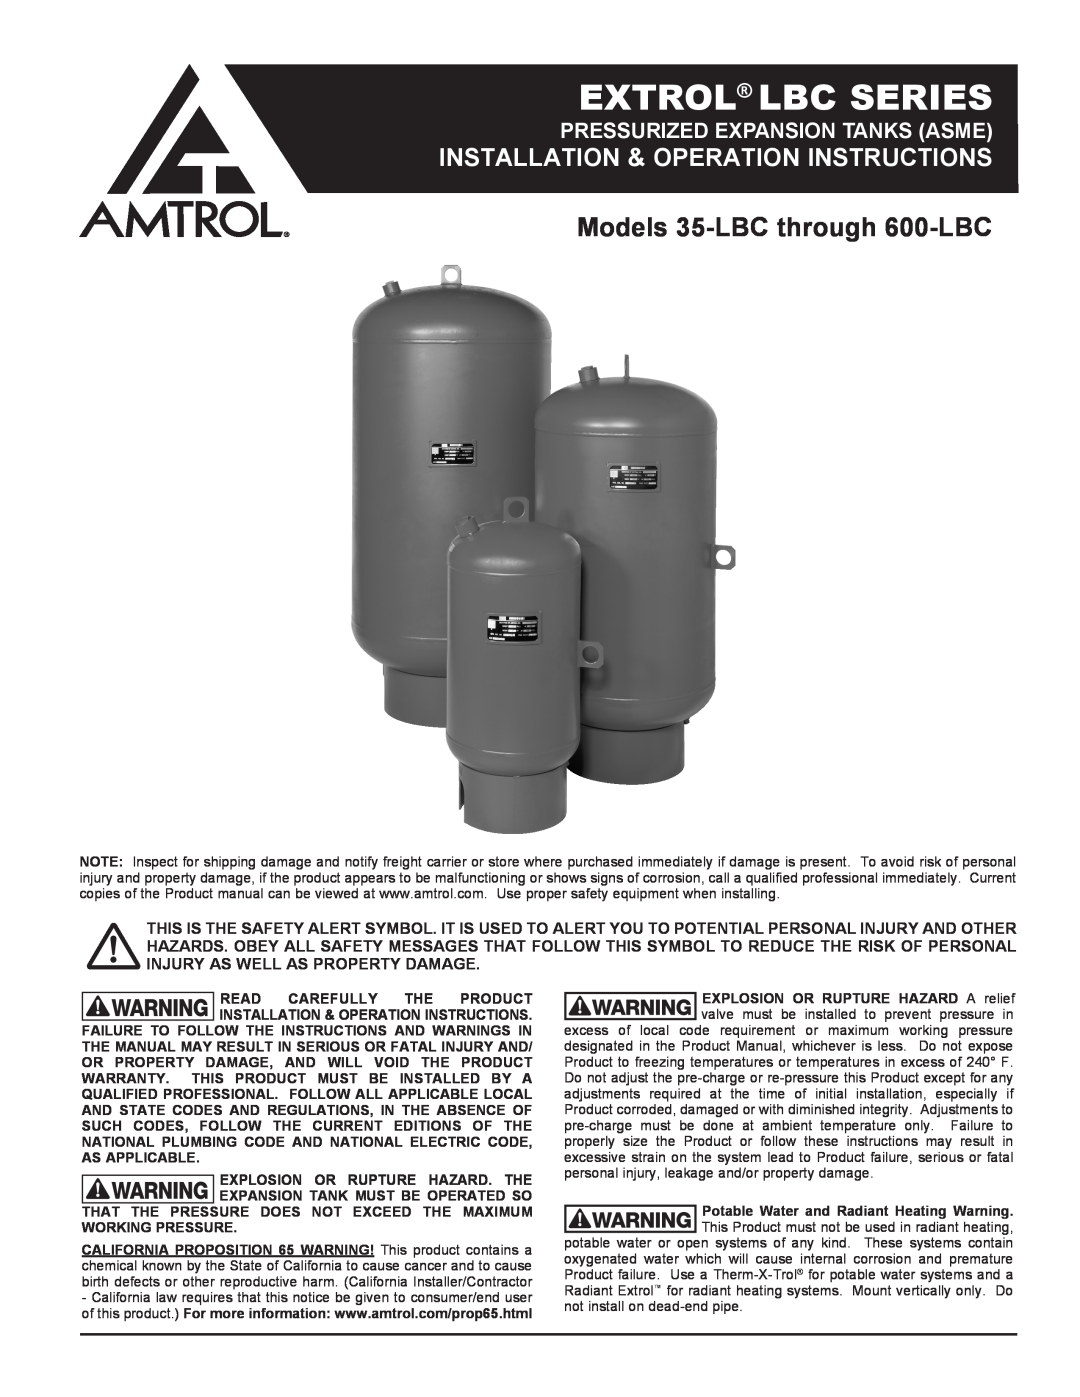 Amtrol warranty Models 35-LBC through 600-LBC, Extrol Lbc Series, Installation & Operation Instructions 